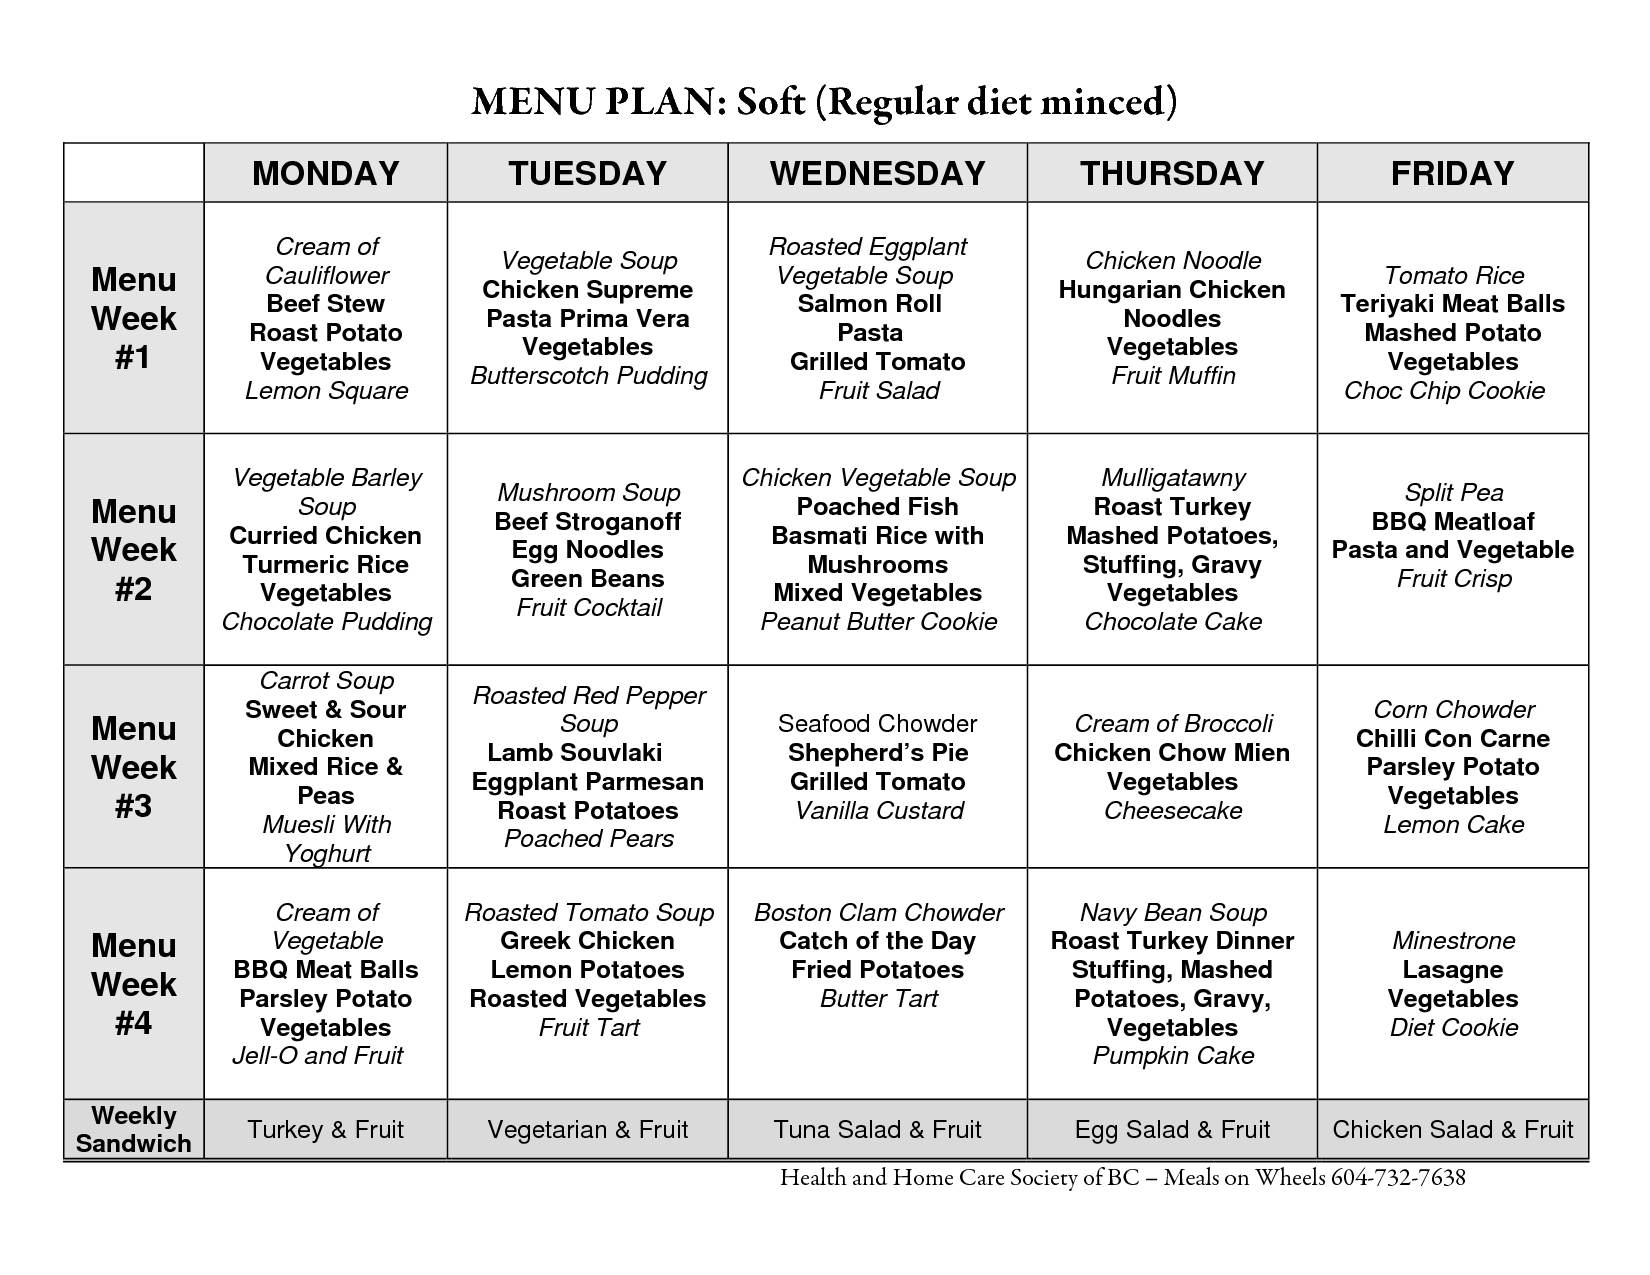 http://www.worksheeto.com/postpic/2009/10/atkins-diet-menu-plan_171300.png